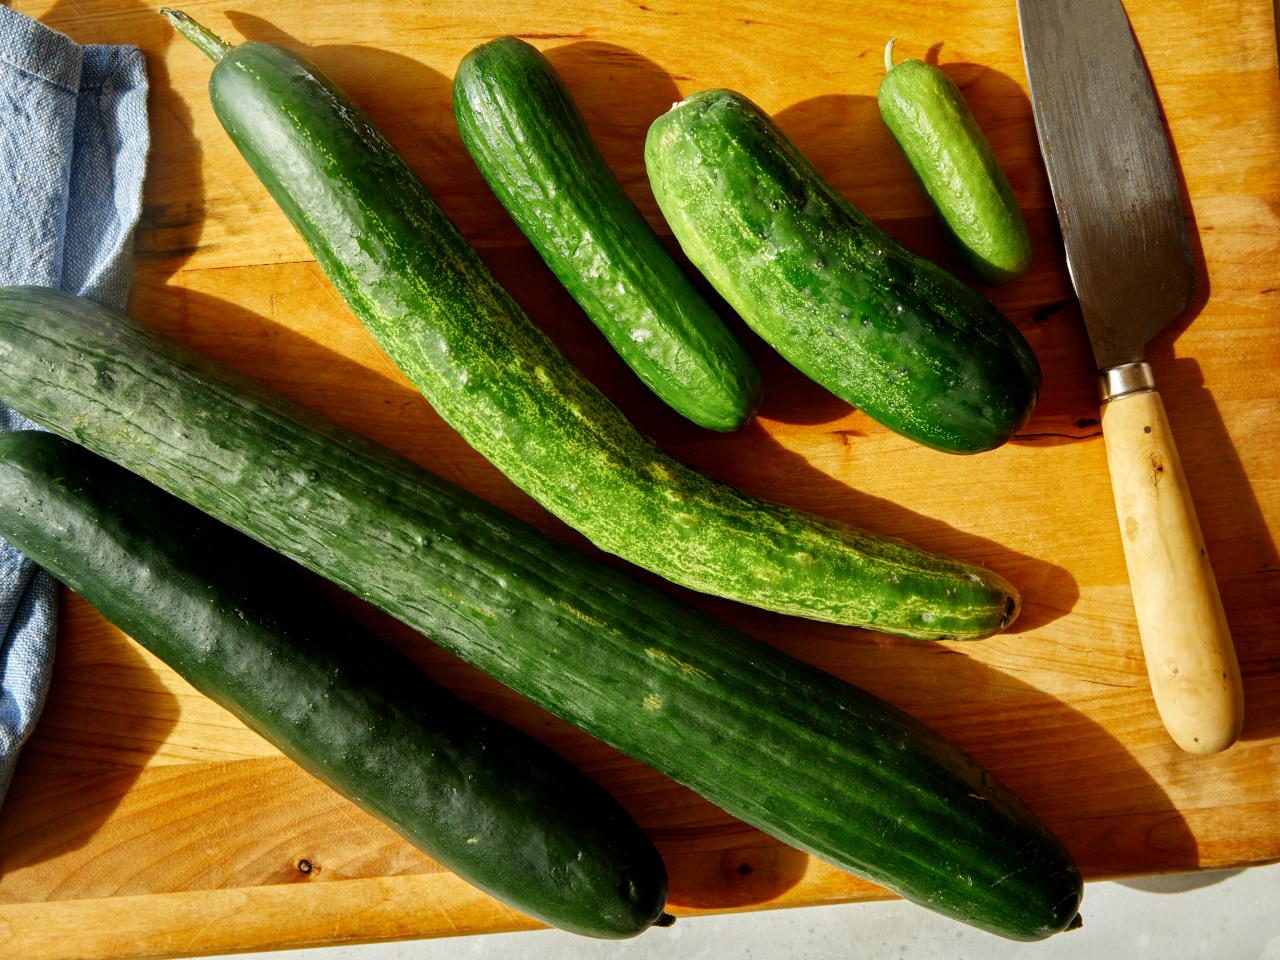 Fresh English Cucumber 12 Count